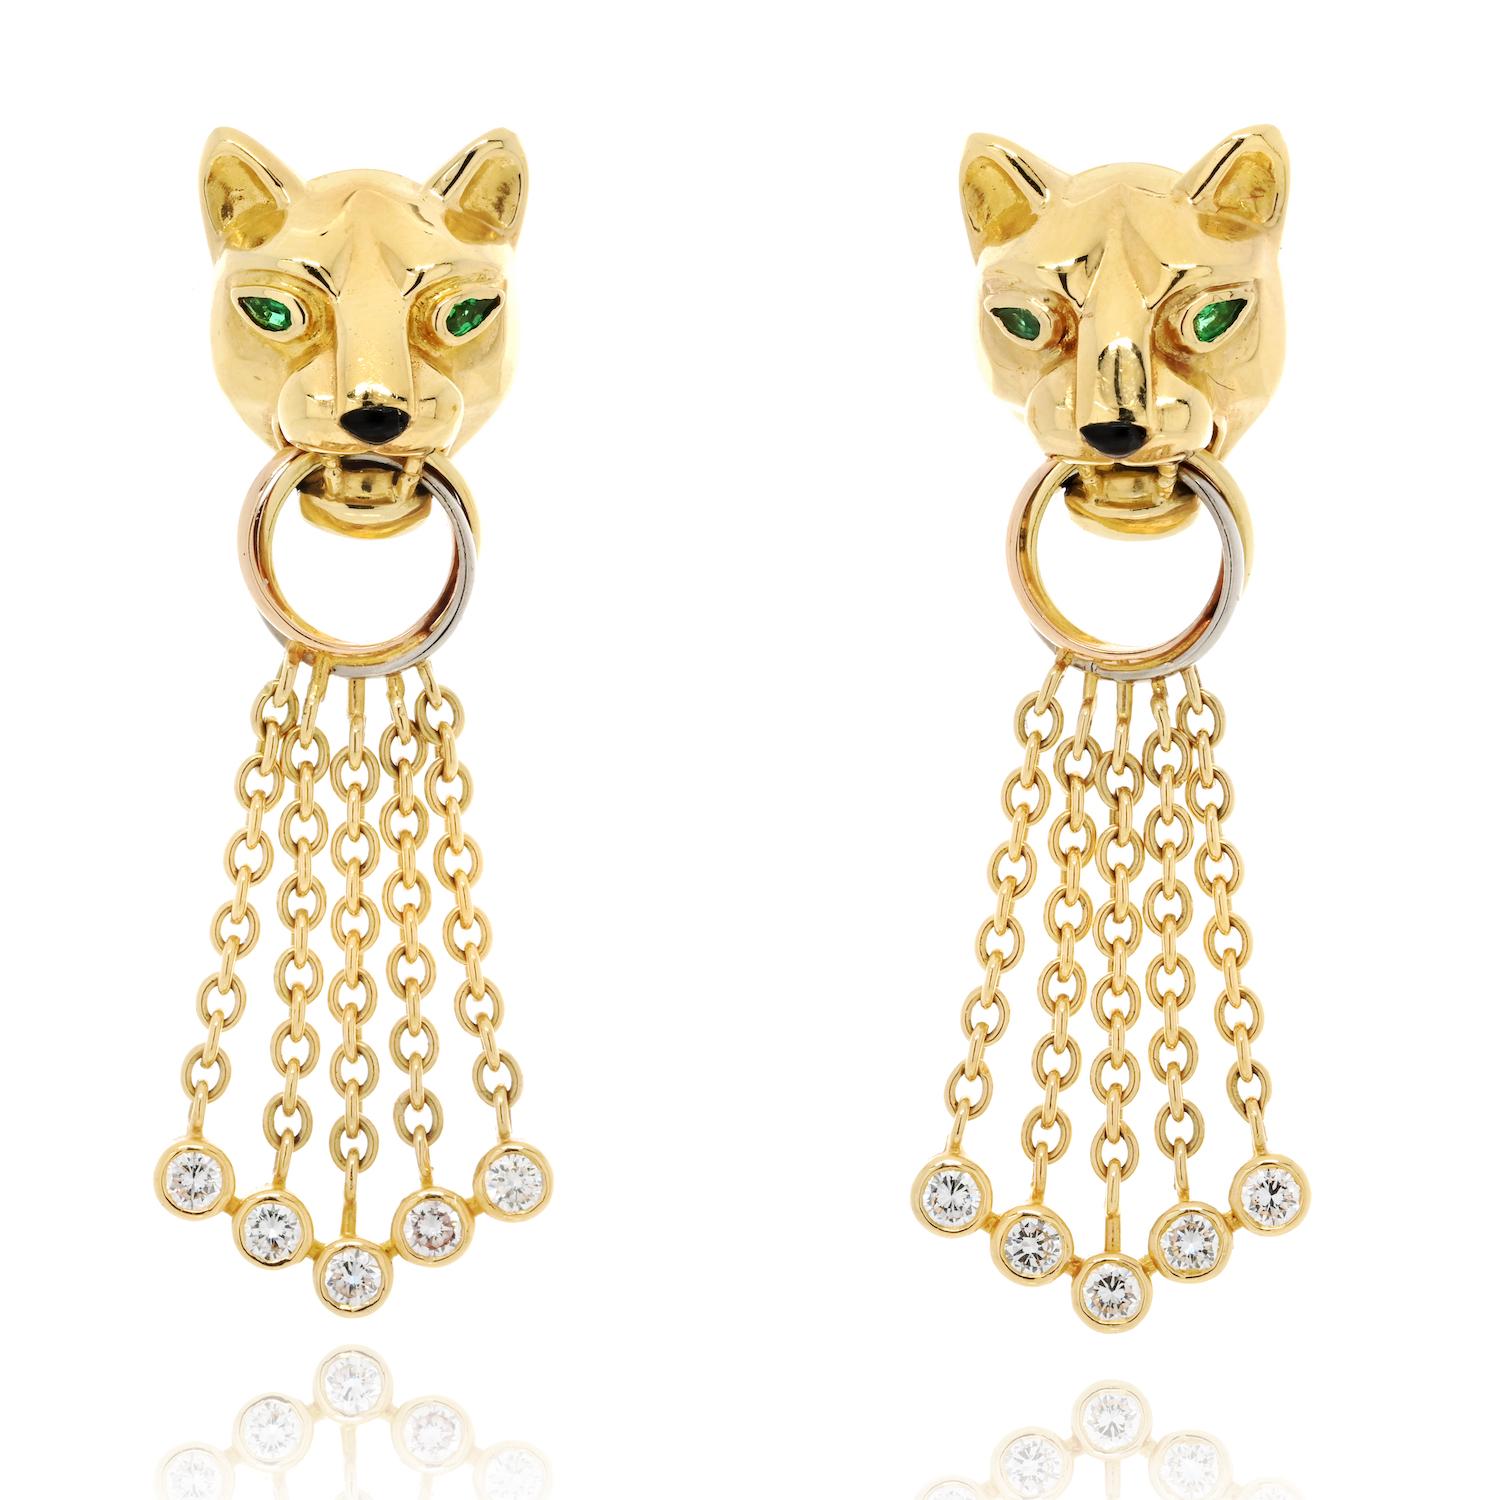 Modern Cartier 18K Yellow Gold Diamond, Emerald, Onyx and Bead ‘Panthère’ Earrings